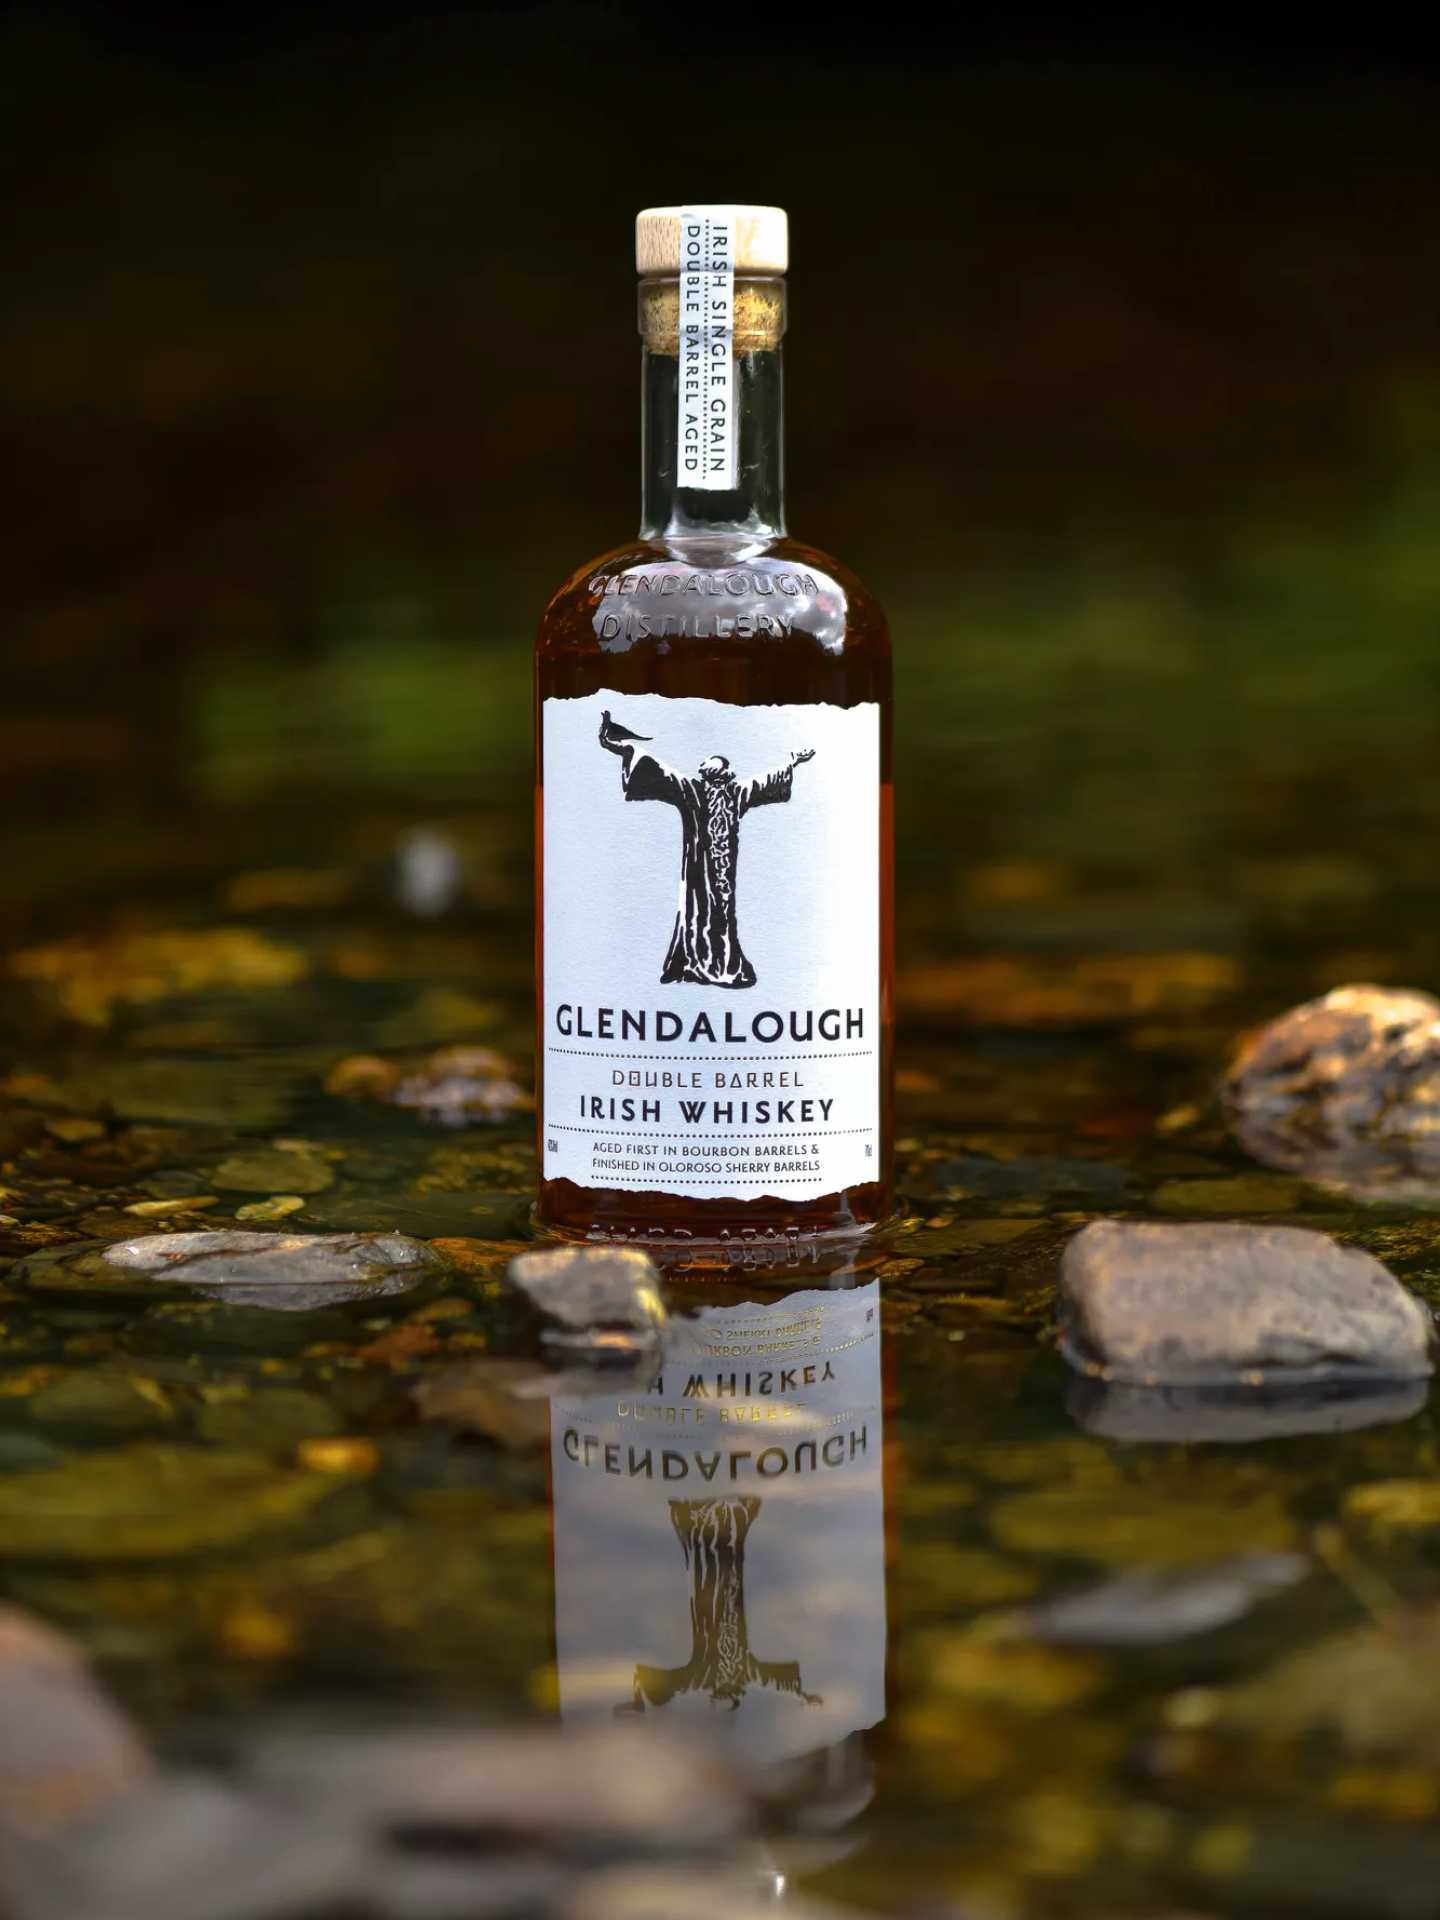 A bottle of Glendalough Double Barrel Irish Whiskey in a pond